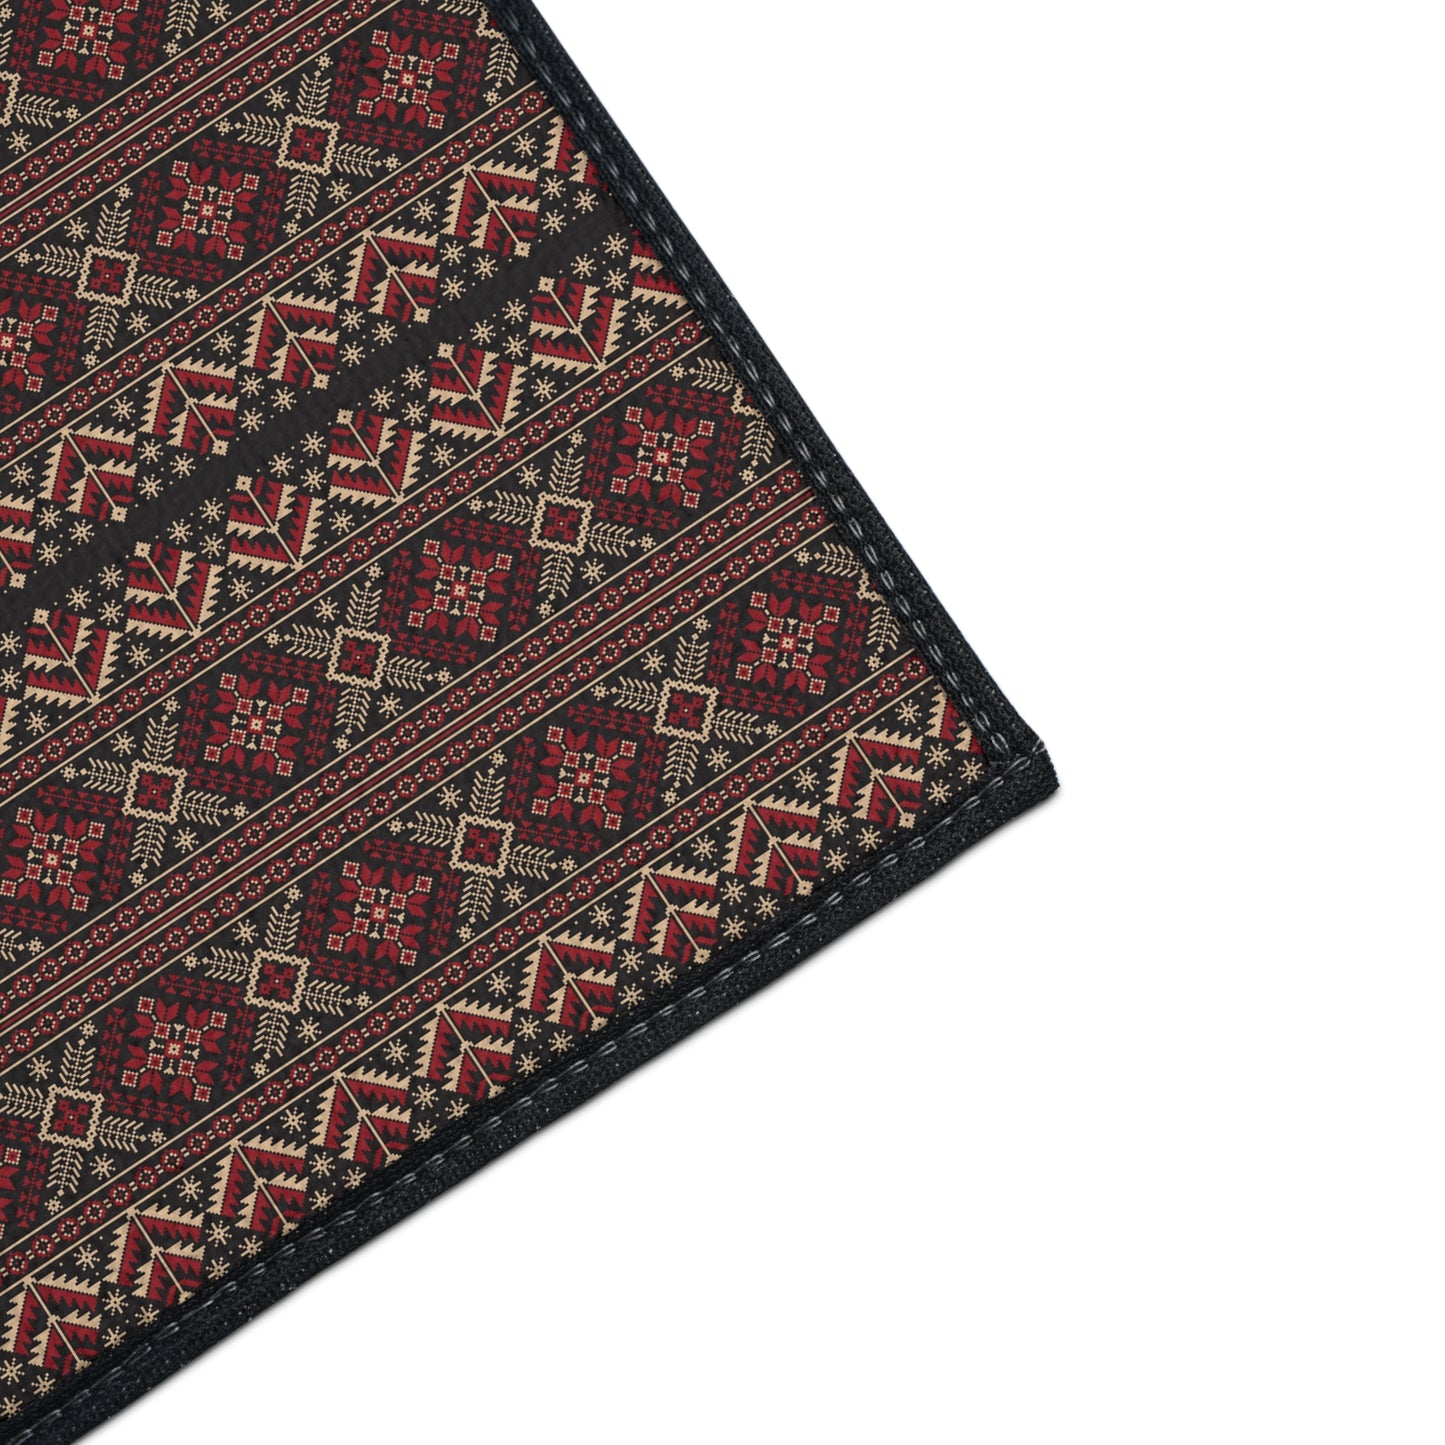 Niccie Arabic Pattern Heavy Duty Floor Mat - Durable, Stylish